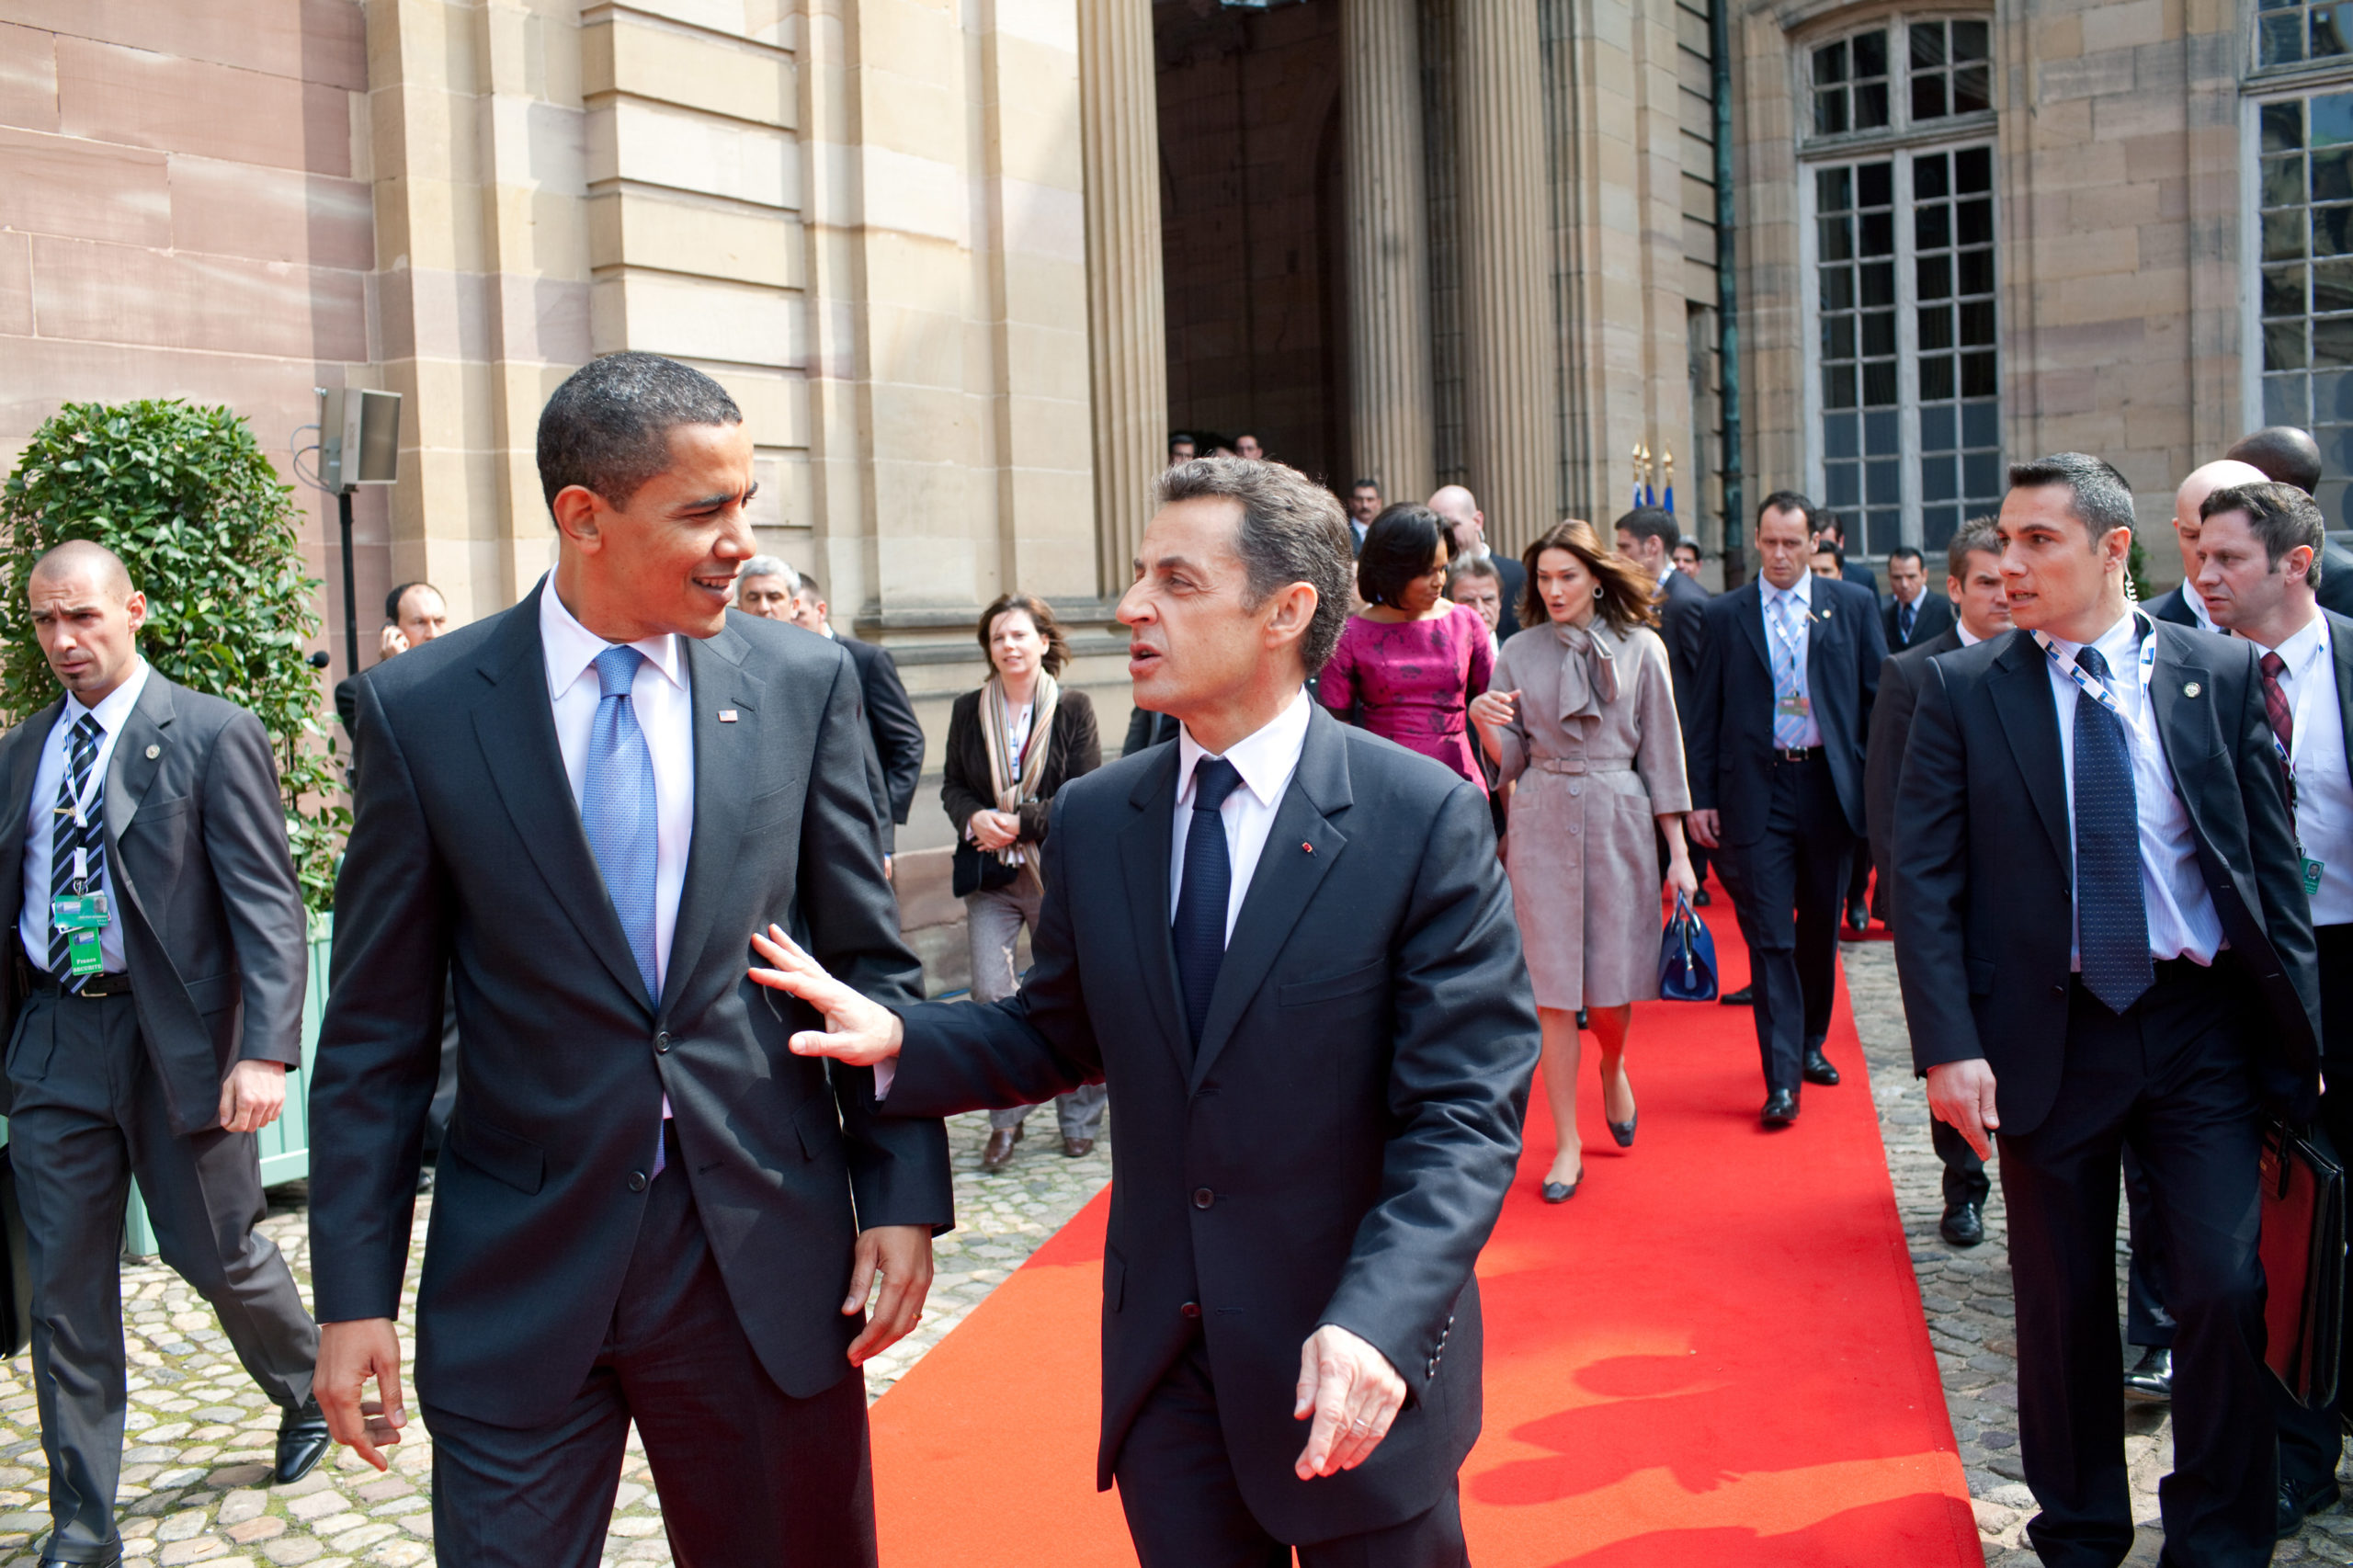 President Barack Obama sammen med den franske presidenten Nicolas Sarkozy i Strasbourg, Frankrike 3. april 2009. Foto: Pete Souza, Official White House Photo / Flickr.